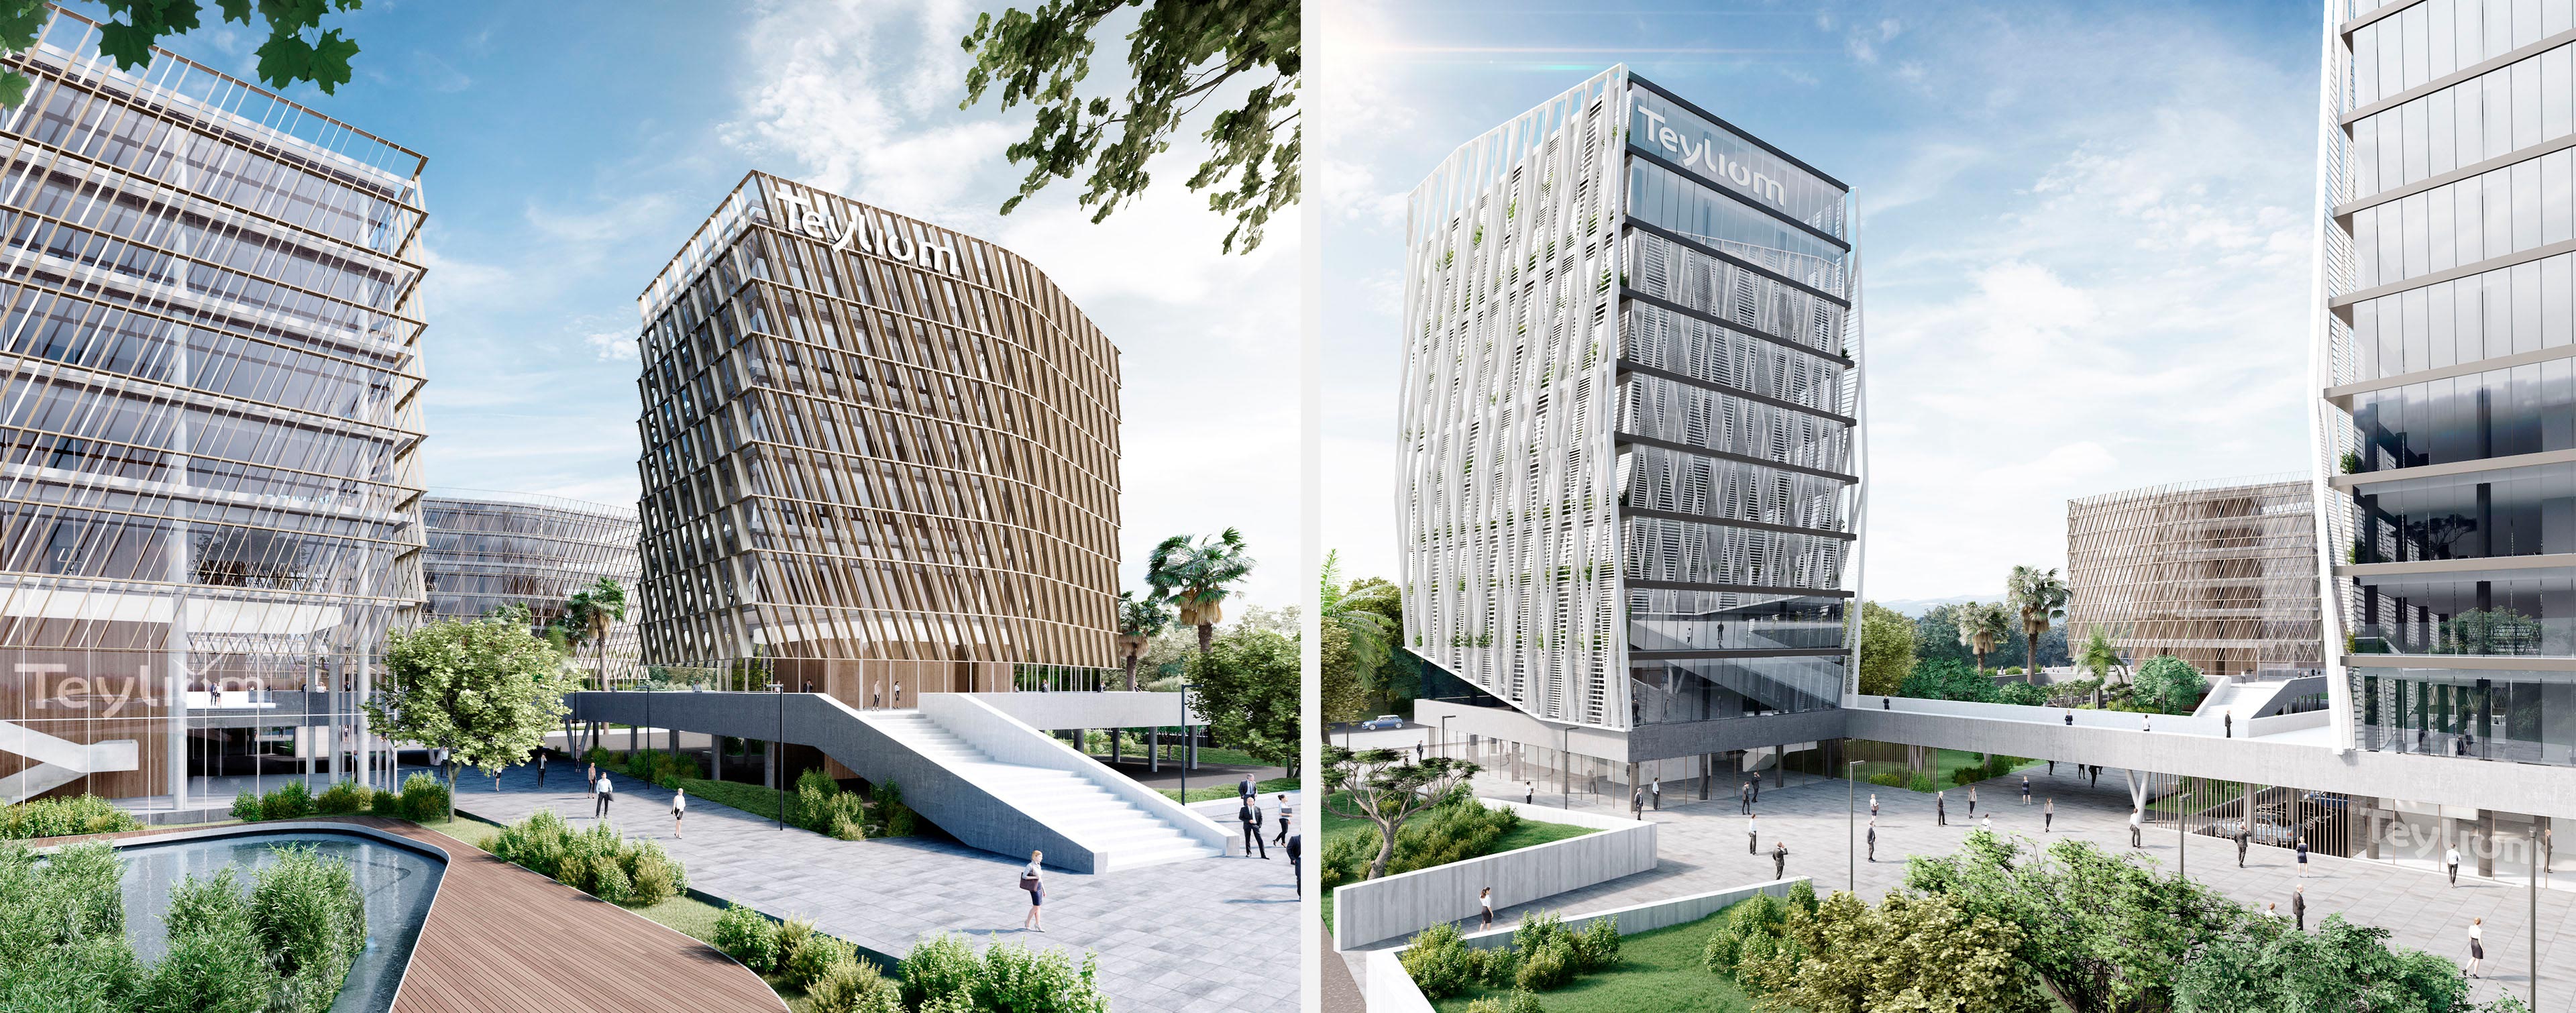 luv studio luxury architects dakkar epycentre business park building IMG 01 - Epycentre Business Park